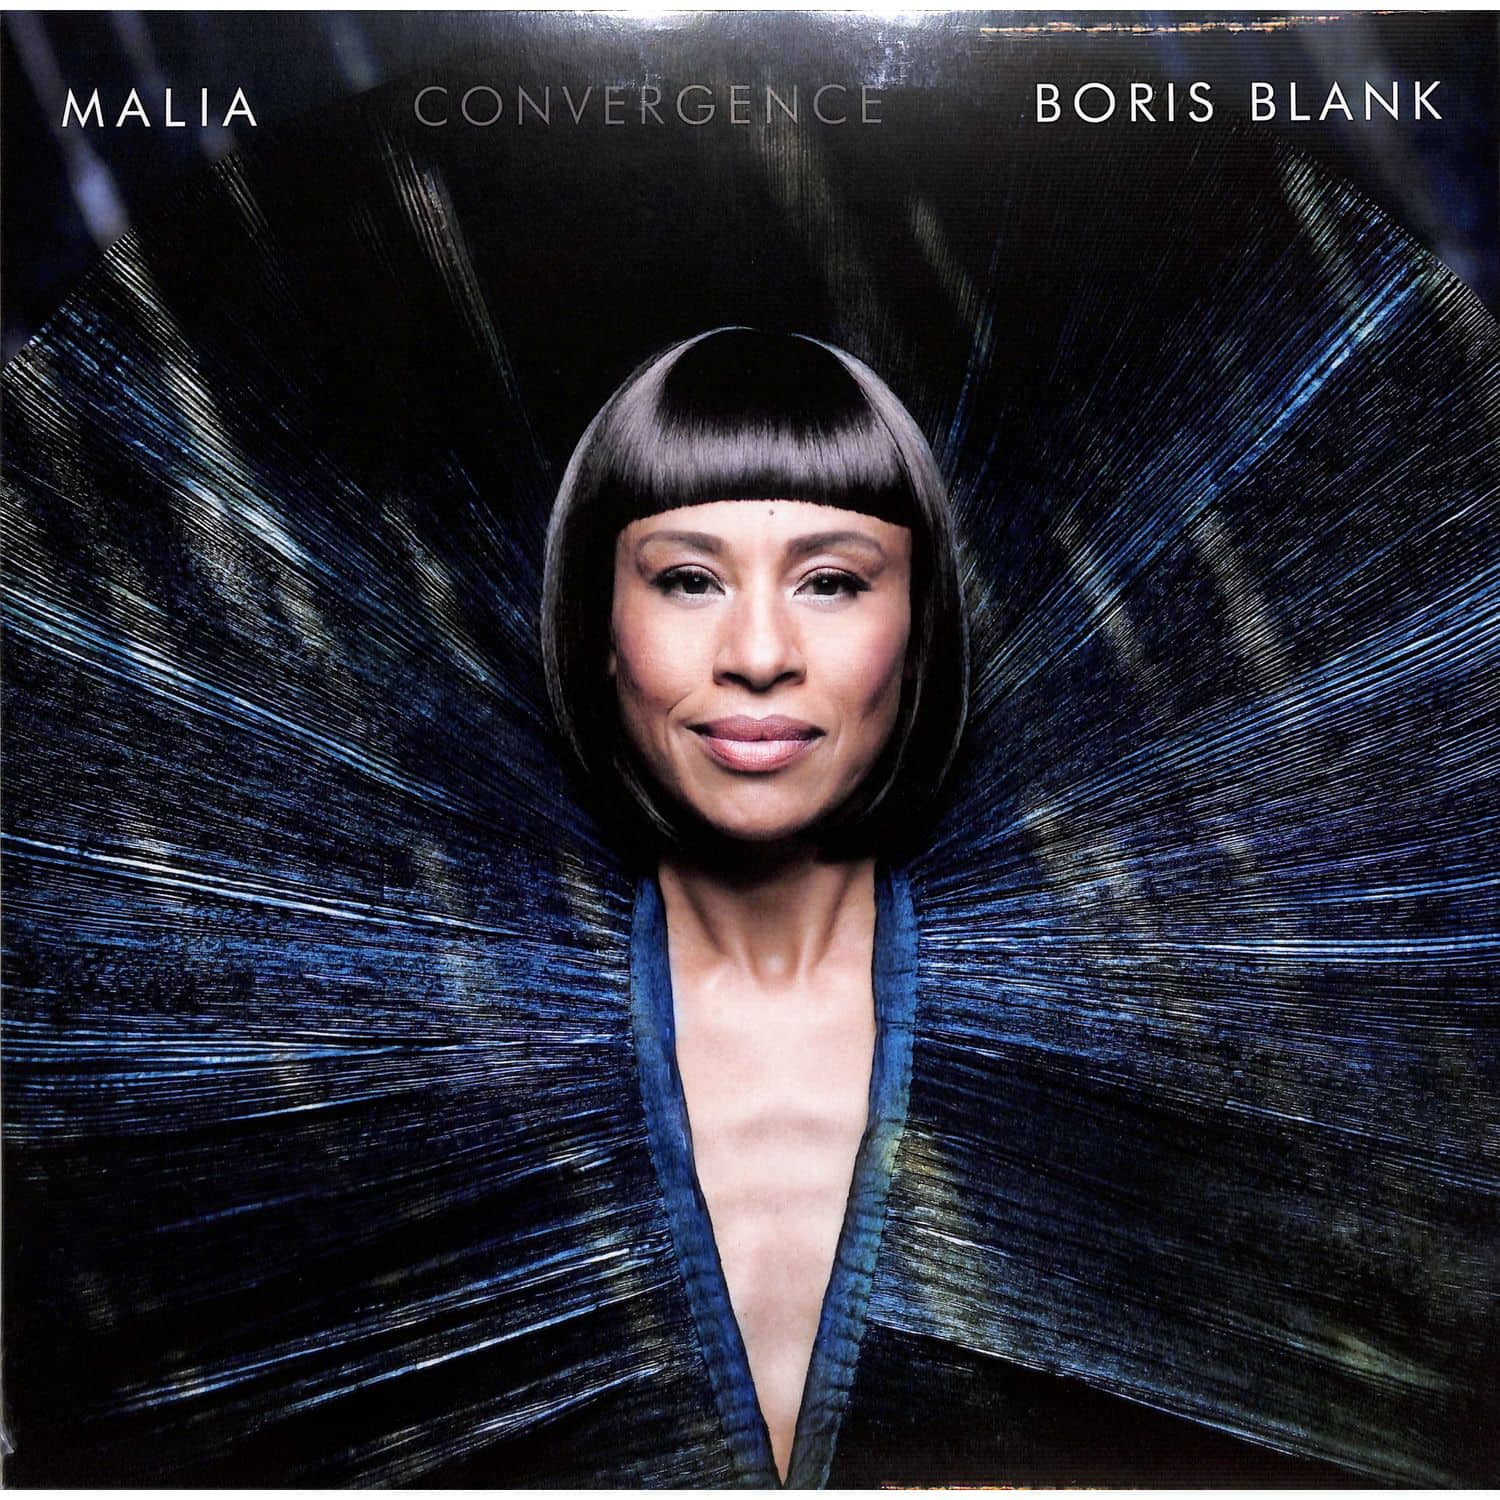 Boris Blank + Malia - CONVERGENCE 